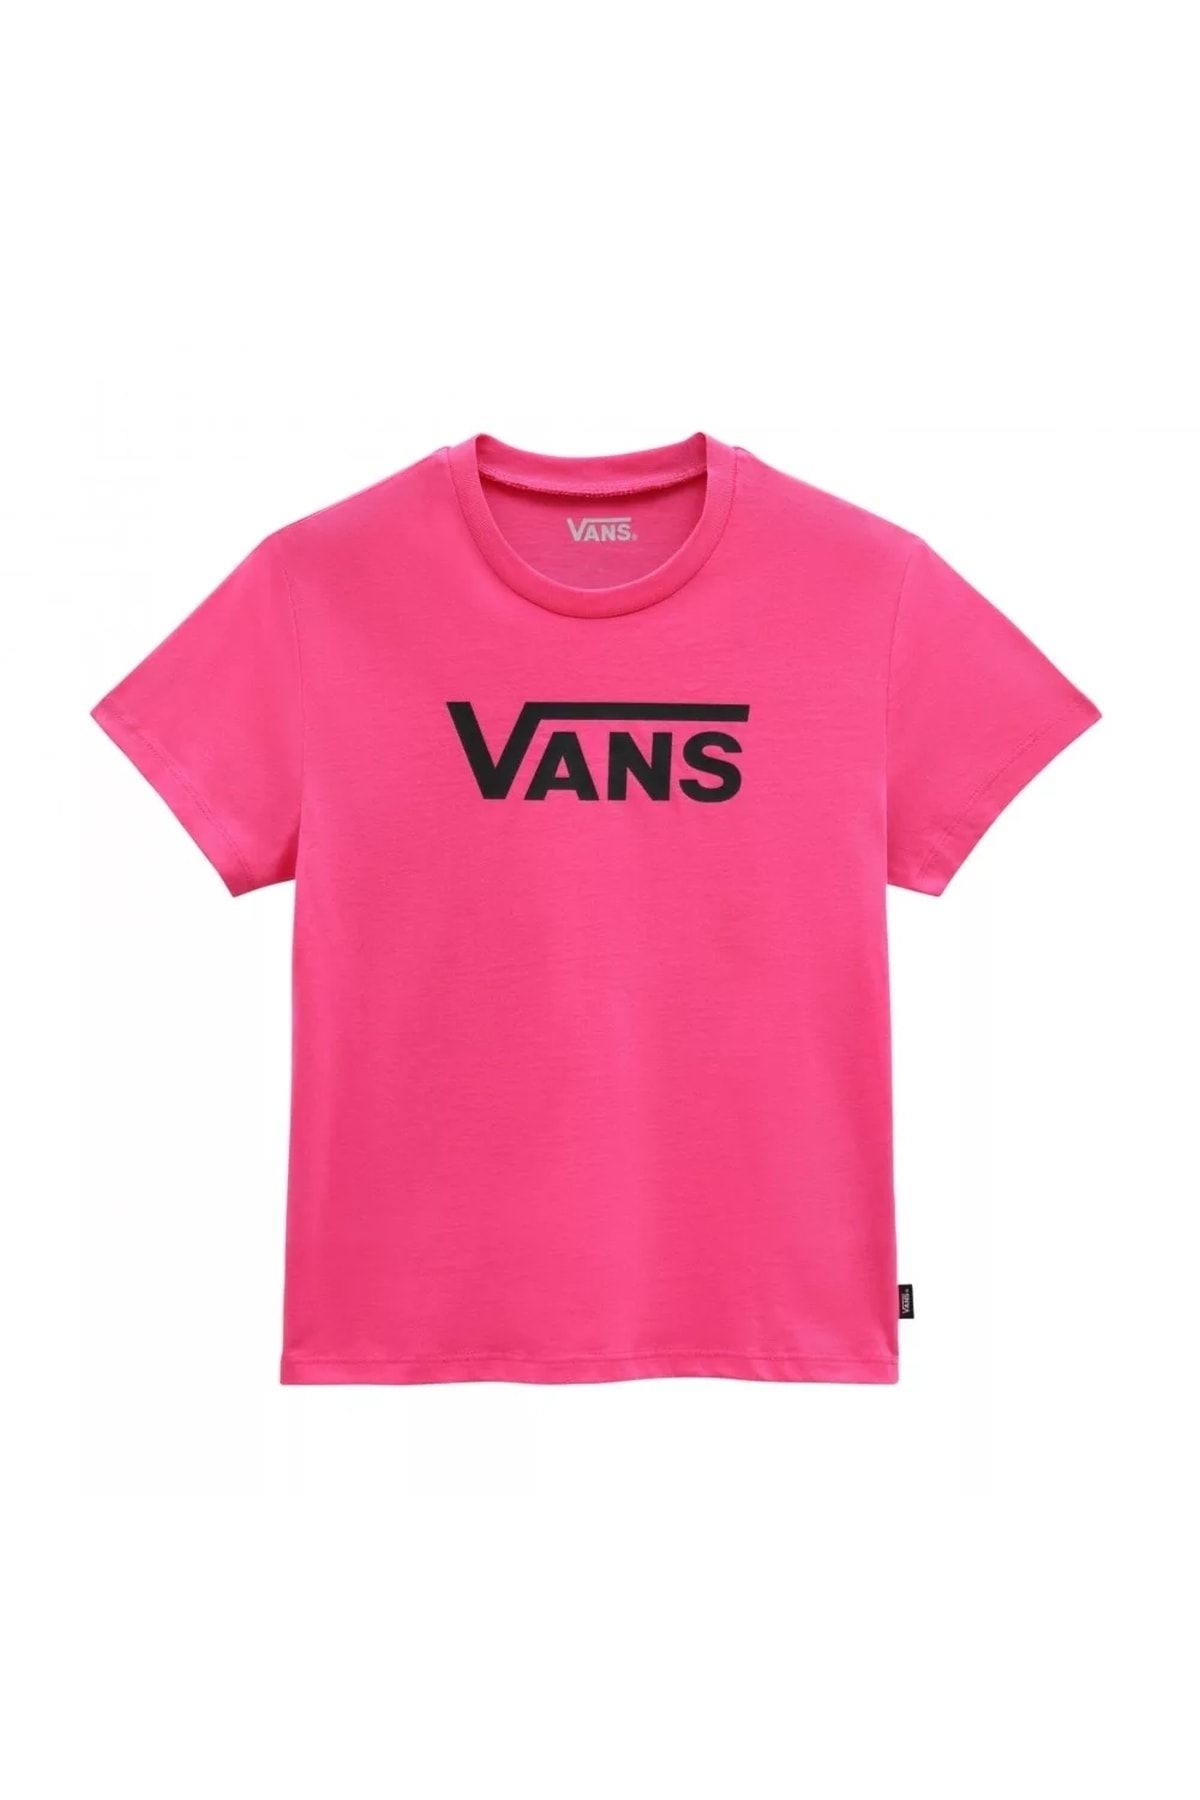 Vans GR FLYING V CREW GIRLS Kız Çocuk T-Shirt - VN0A53P2 Magenta